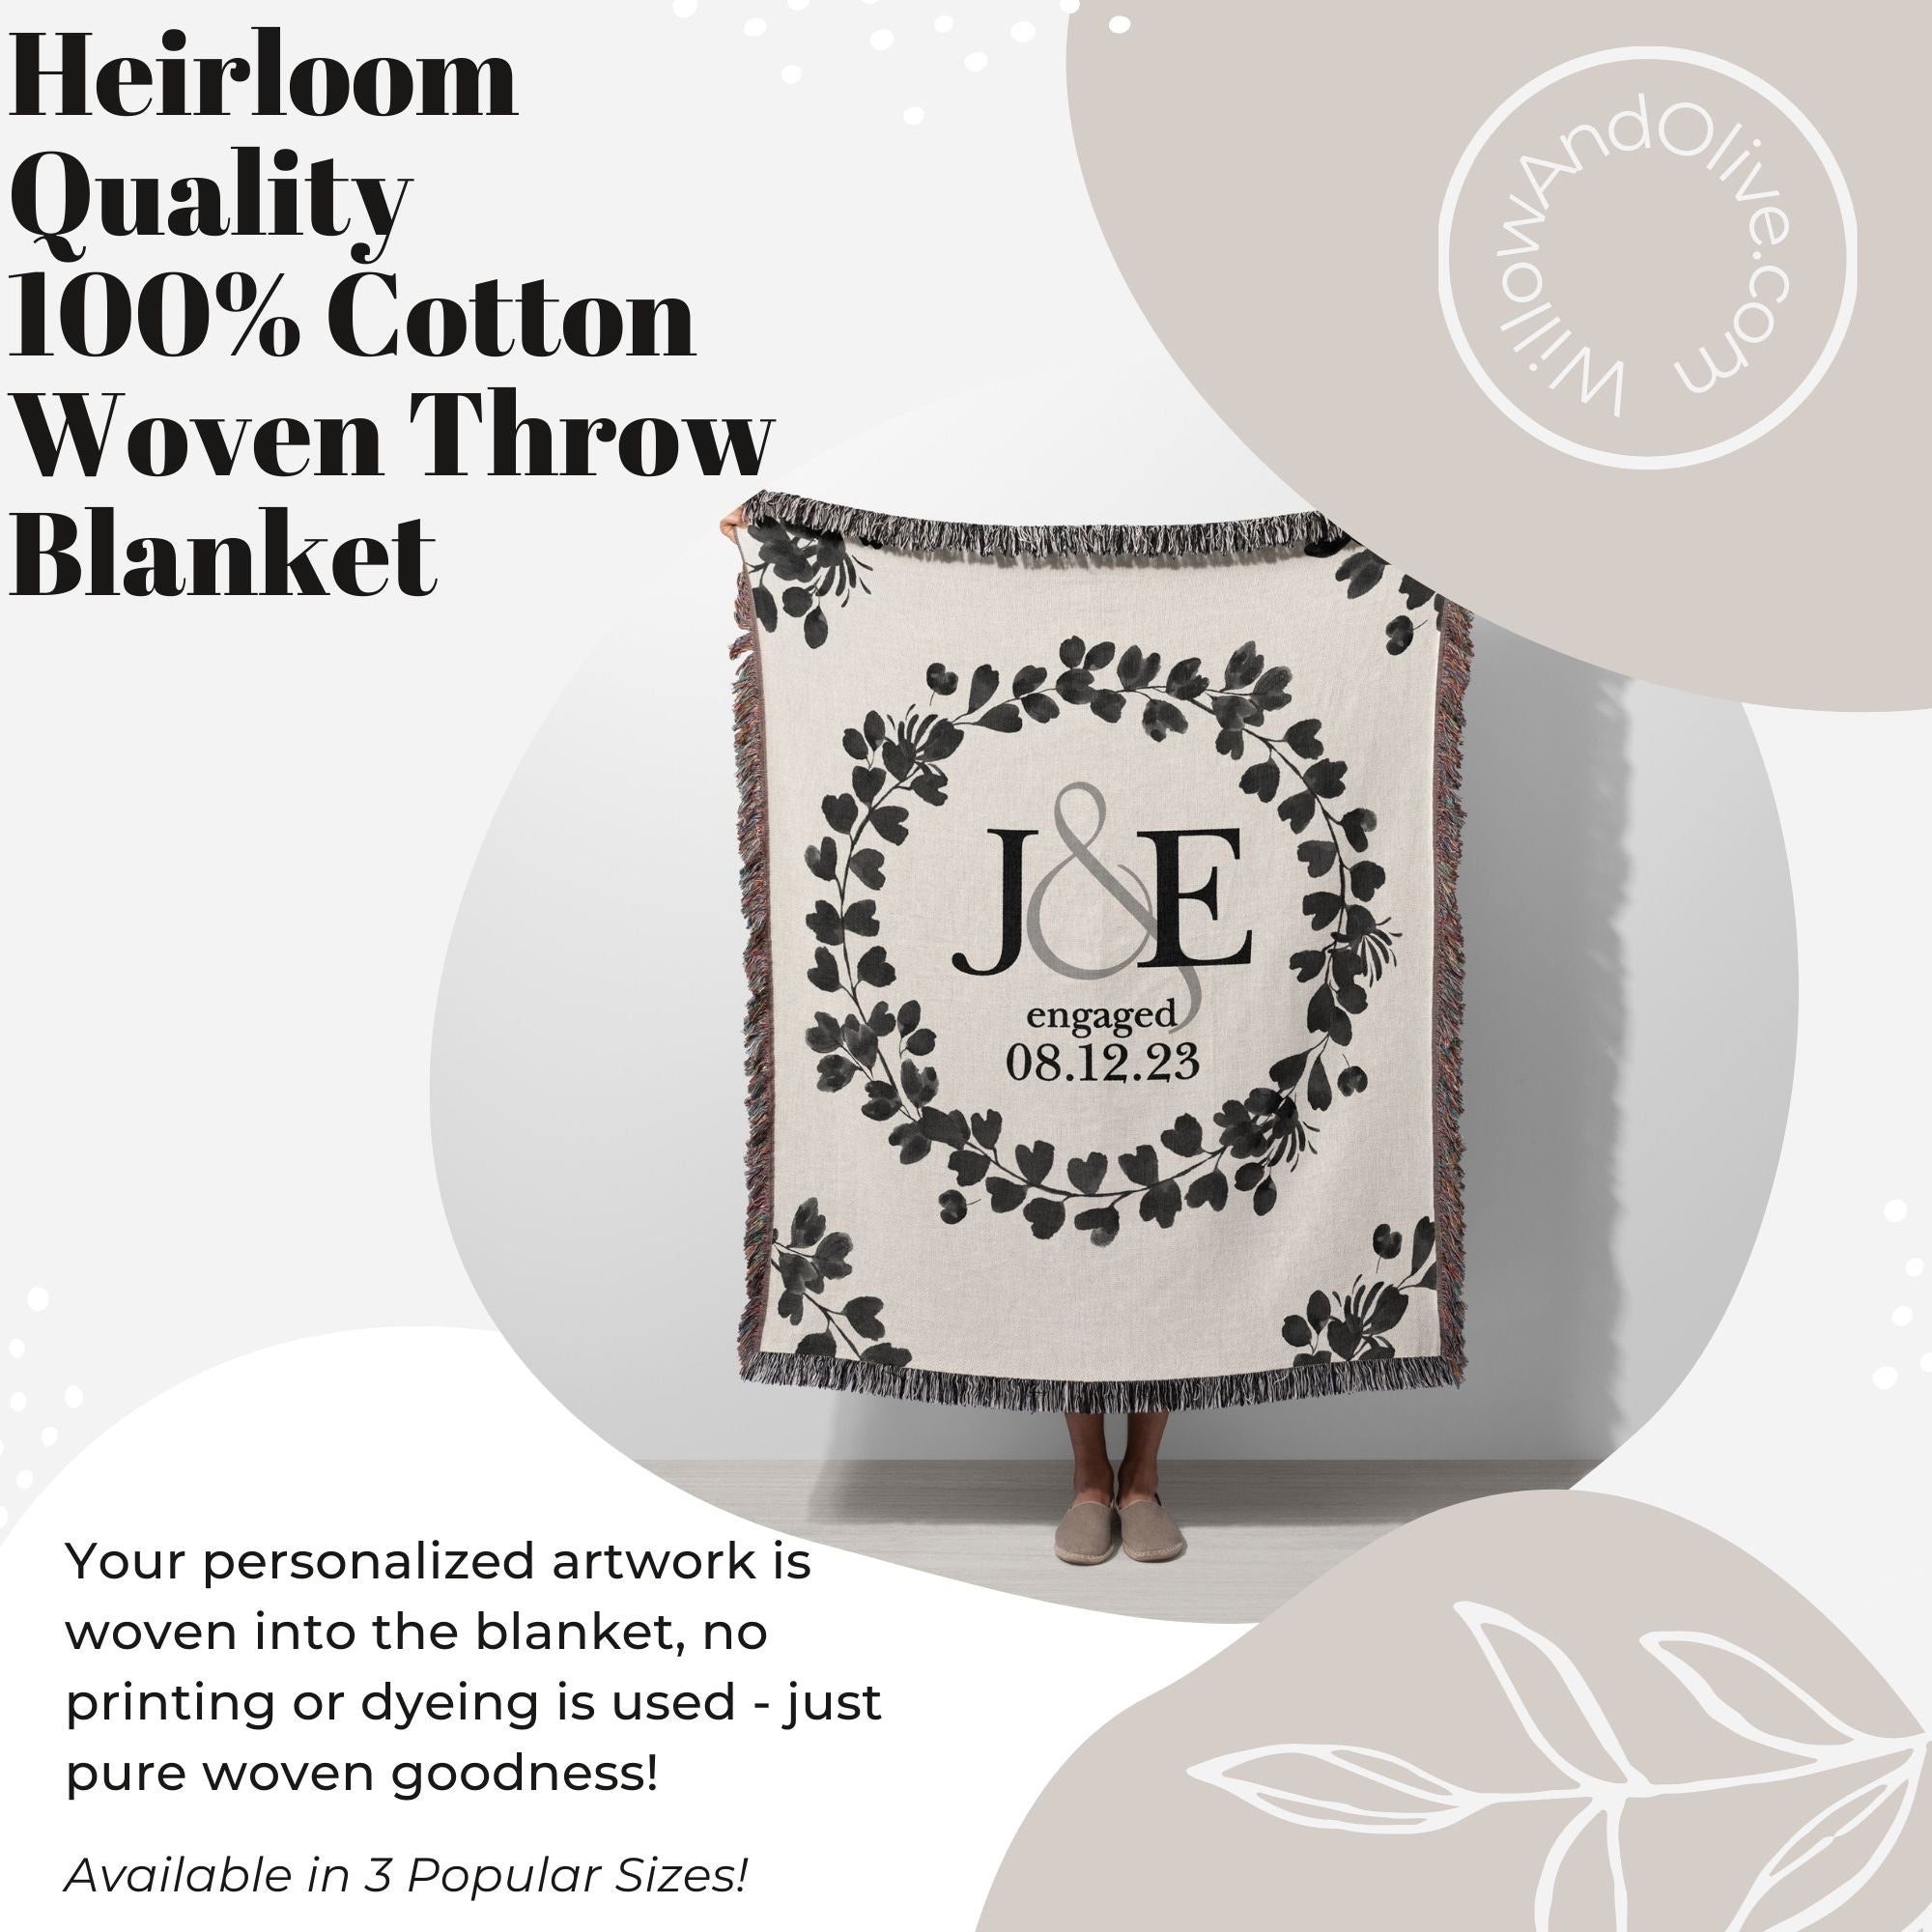 Wishing Flower Blanket Tag - Cotton Label Set - 1.5x1.5 – EverEmblem